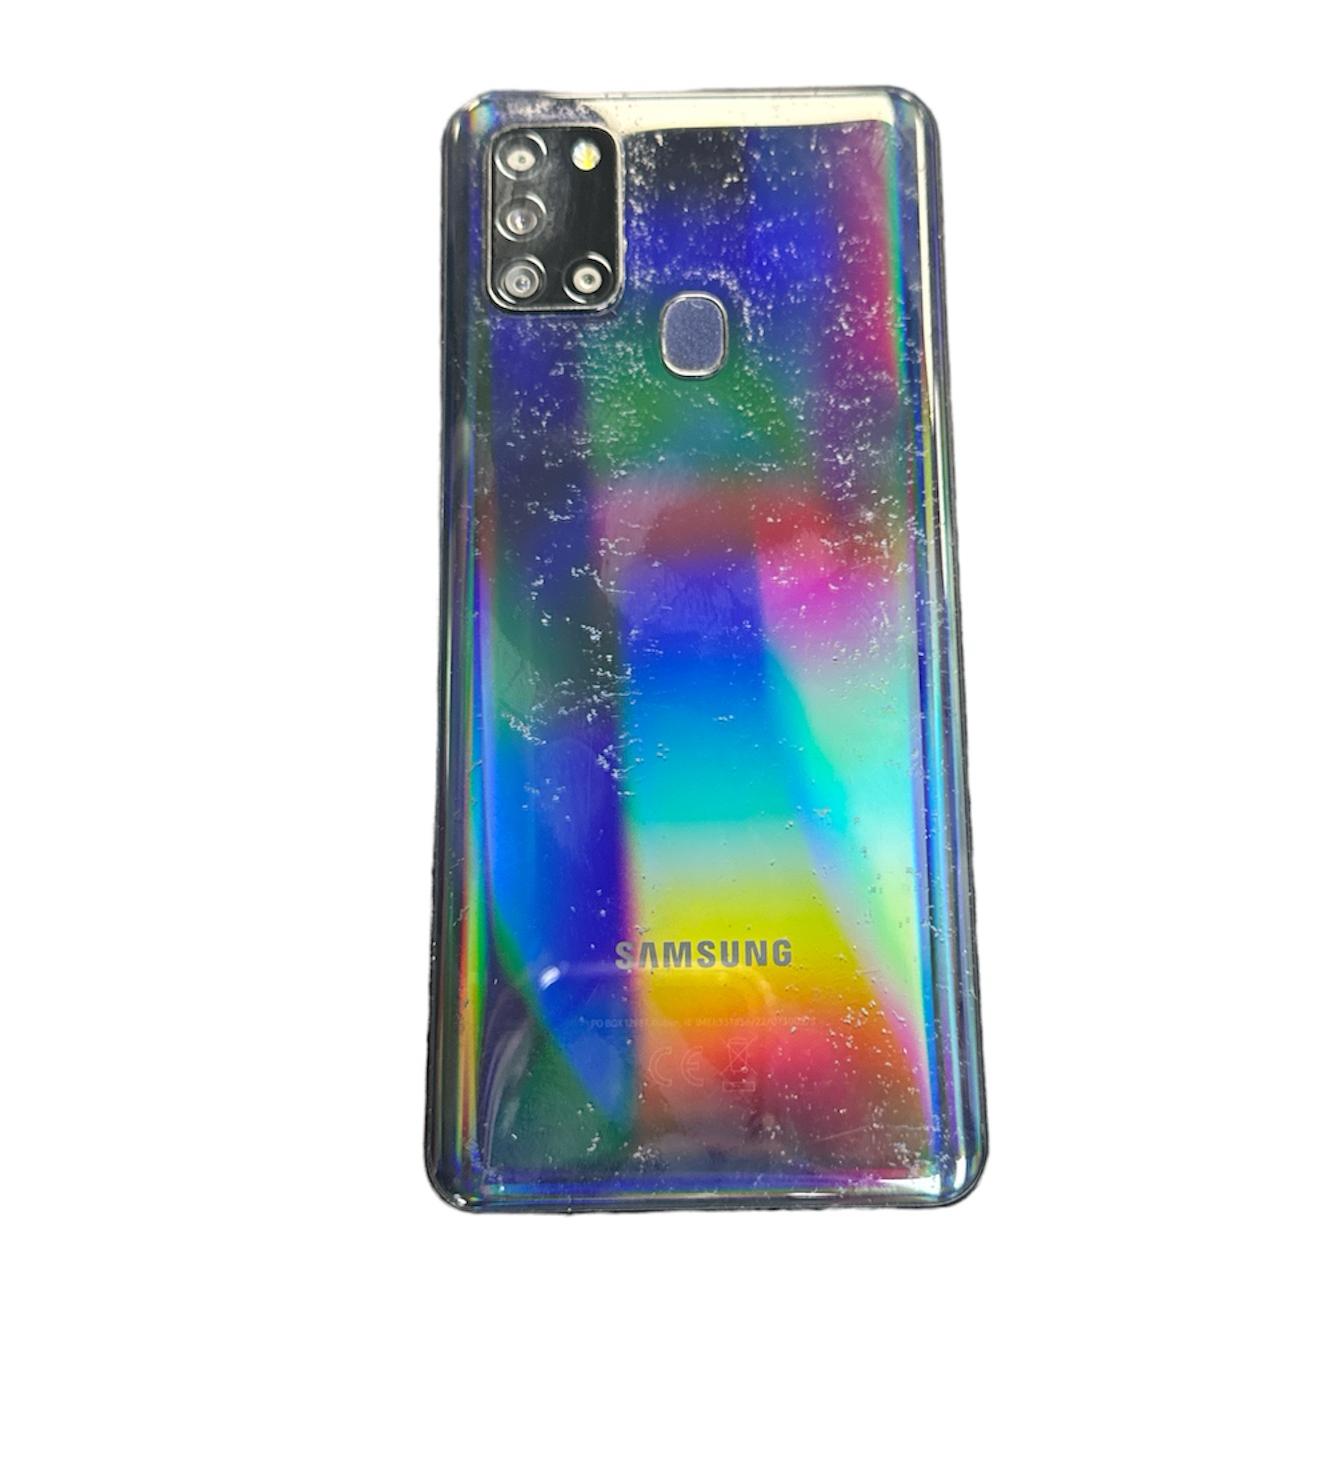 Samsung Galaxy A21s 32Gb Unboxed Unlocked